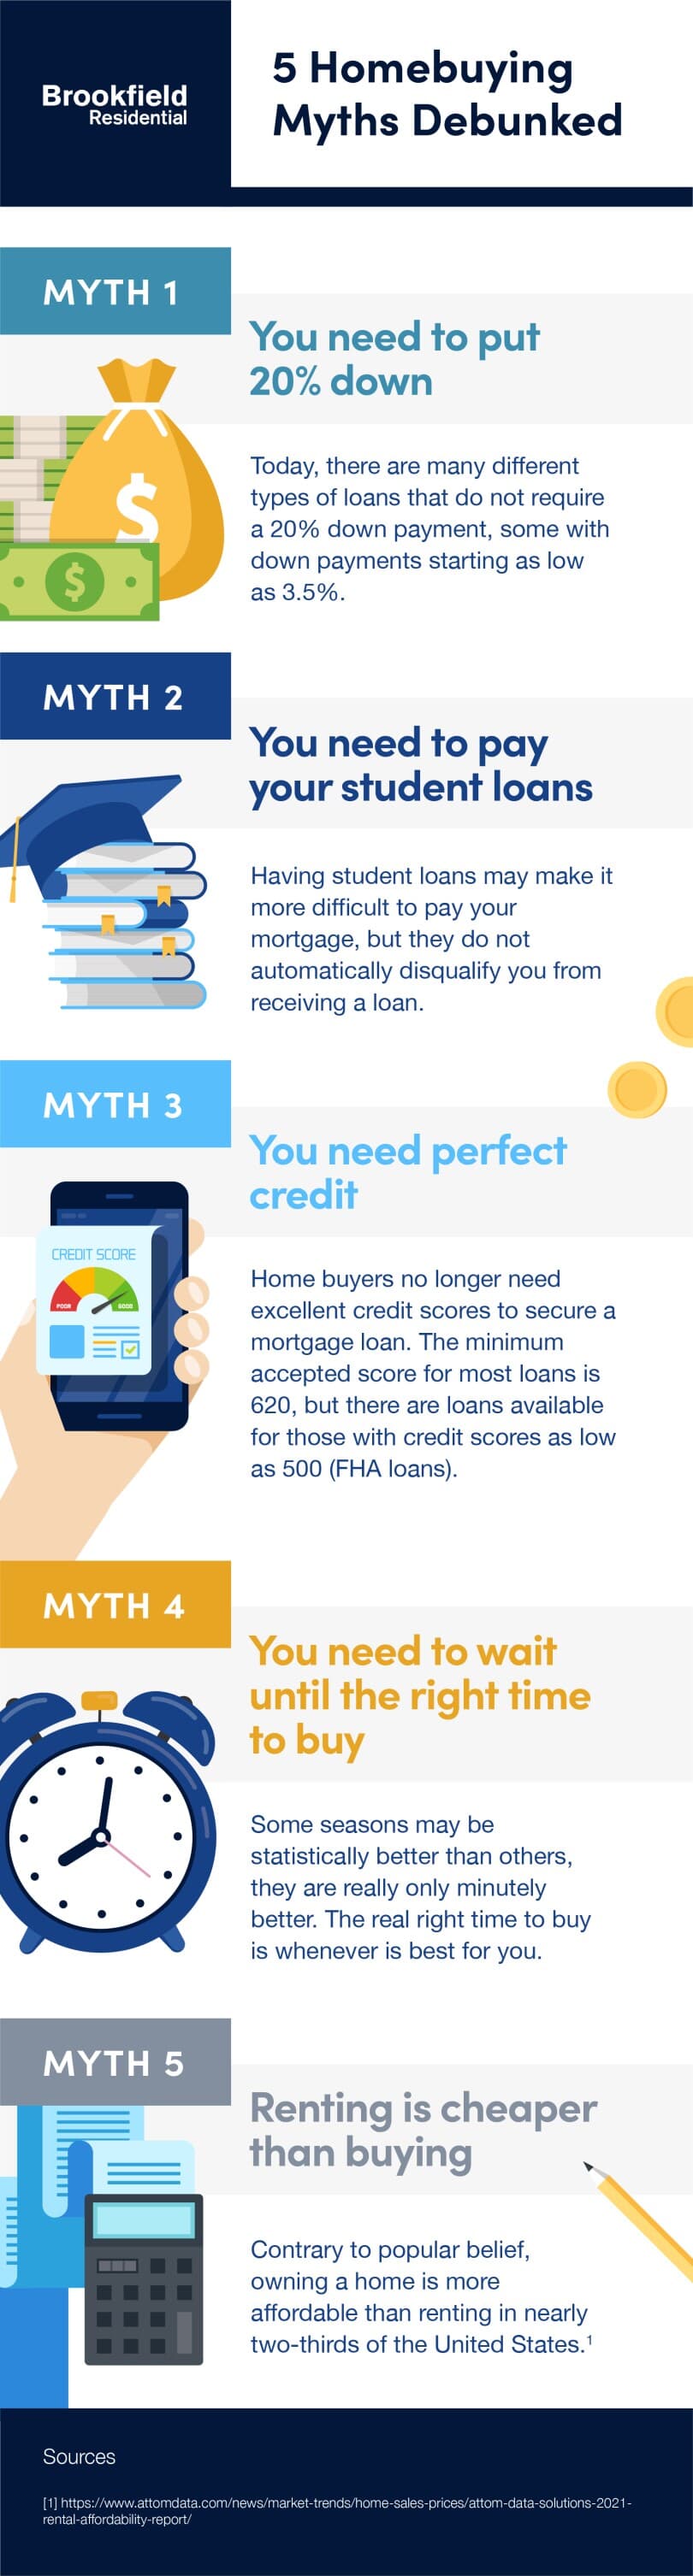 5 Homebuying Myths Debunked infographic